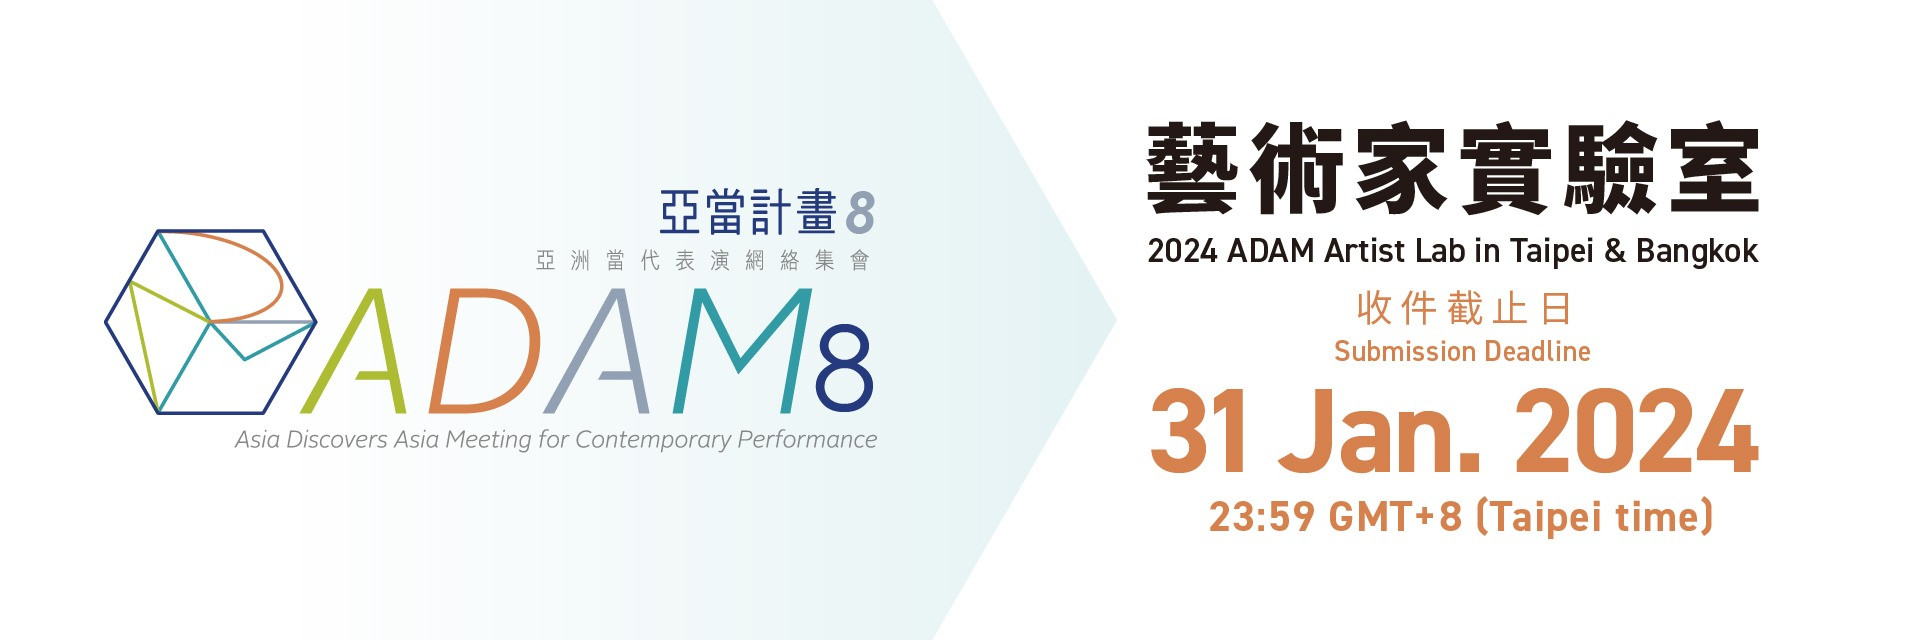 2024 ADAM Artist Lab in Taipei & Bangkok, Applying Now until 31 Jan! 主要圖片